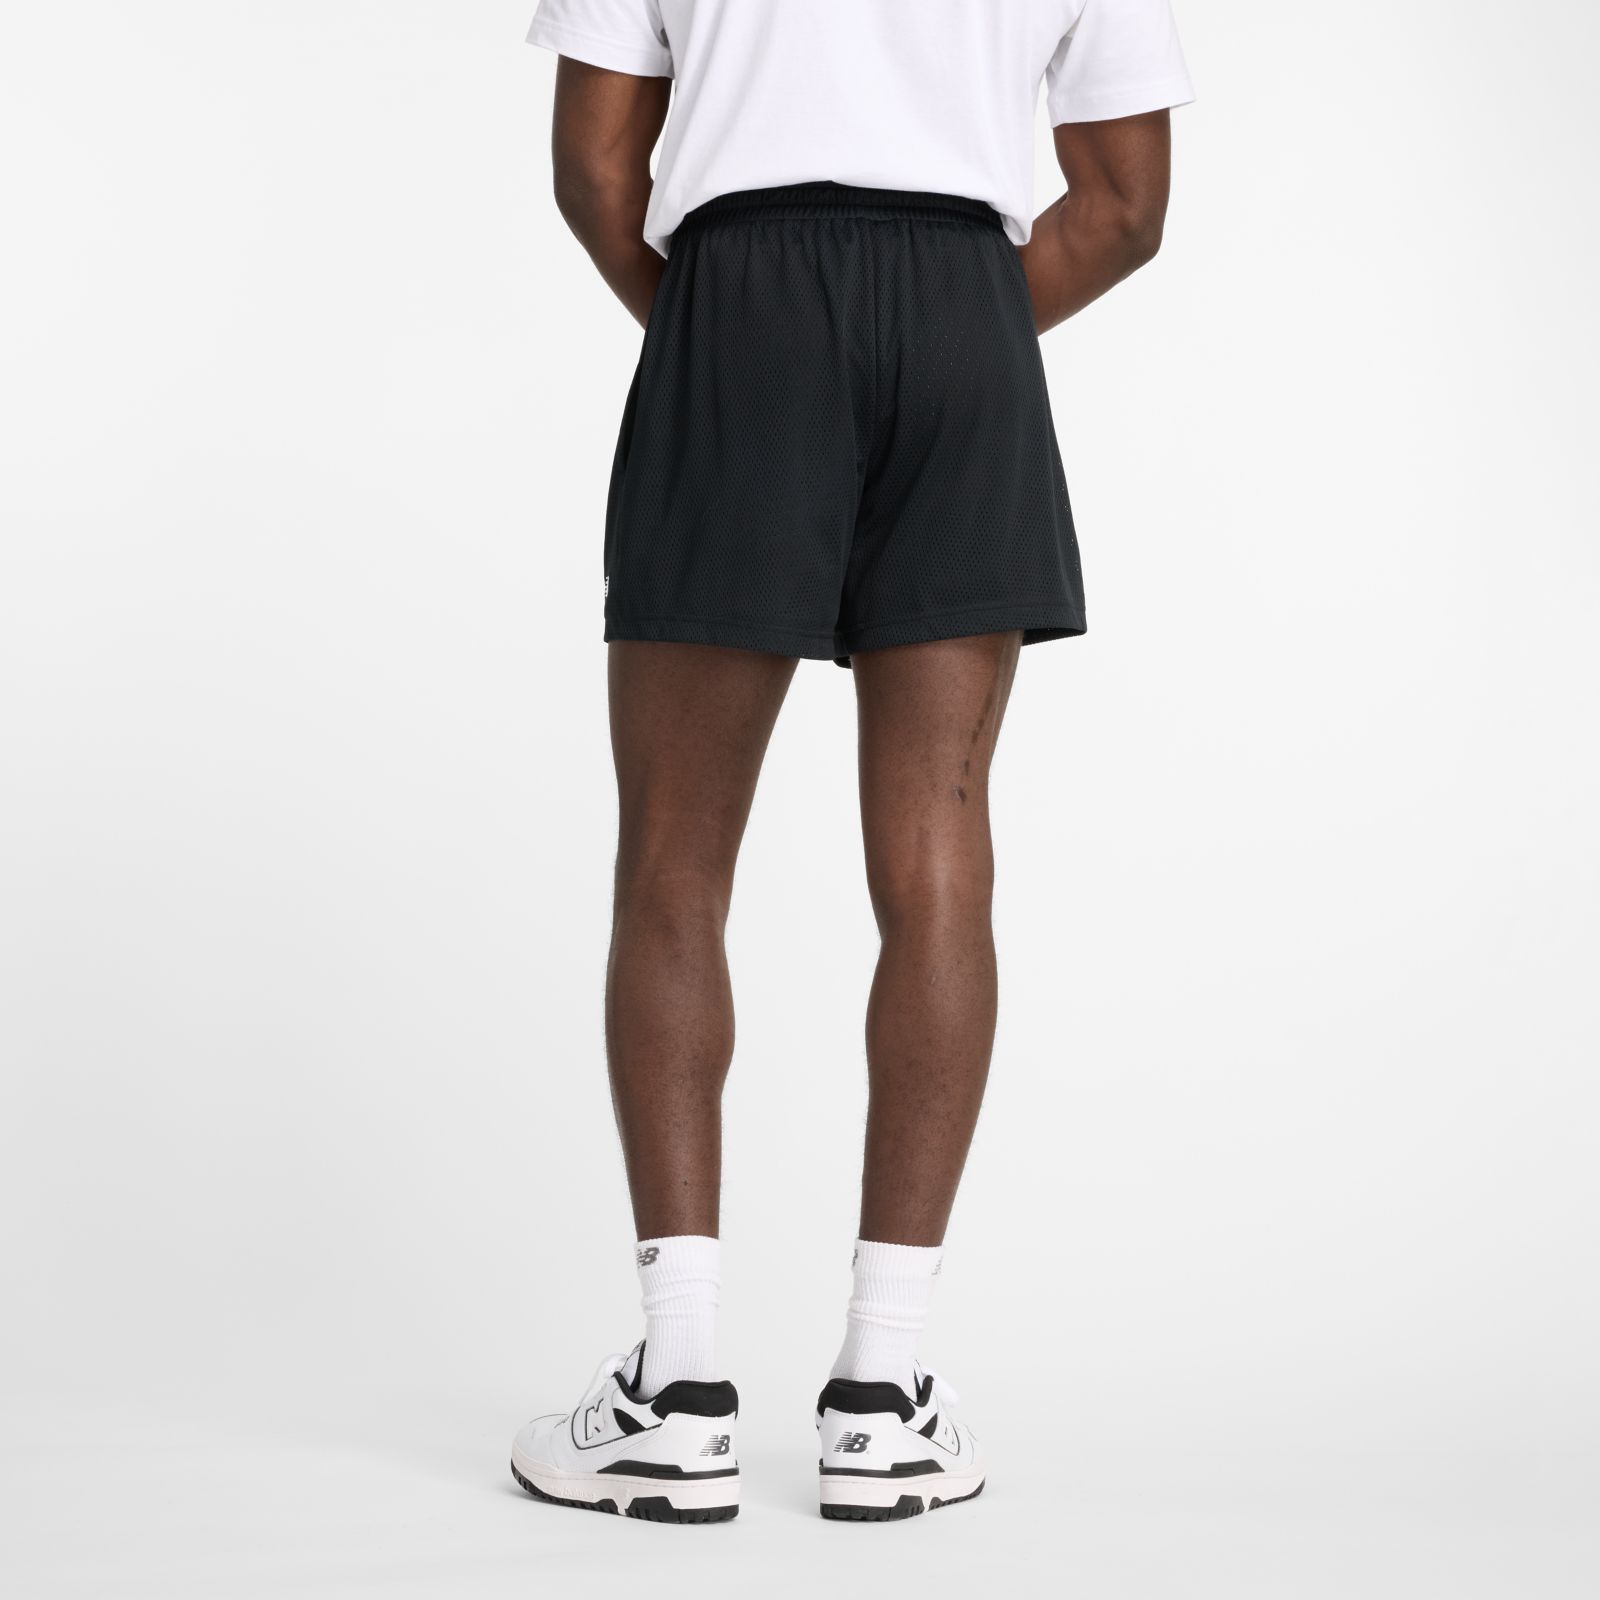 Men's Shorts - Athletic & Running Shorts - New Balance